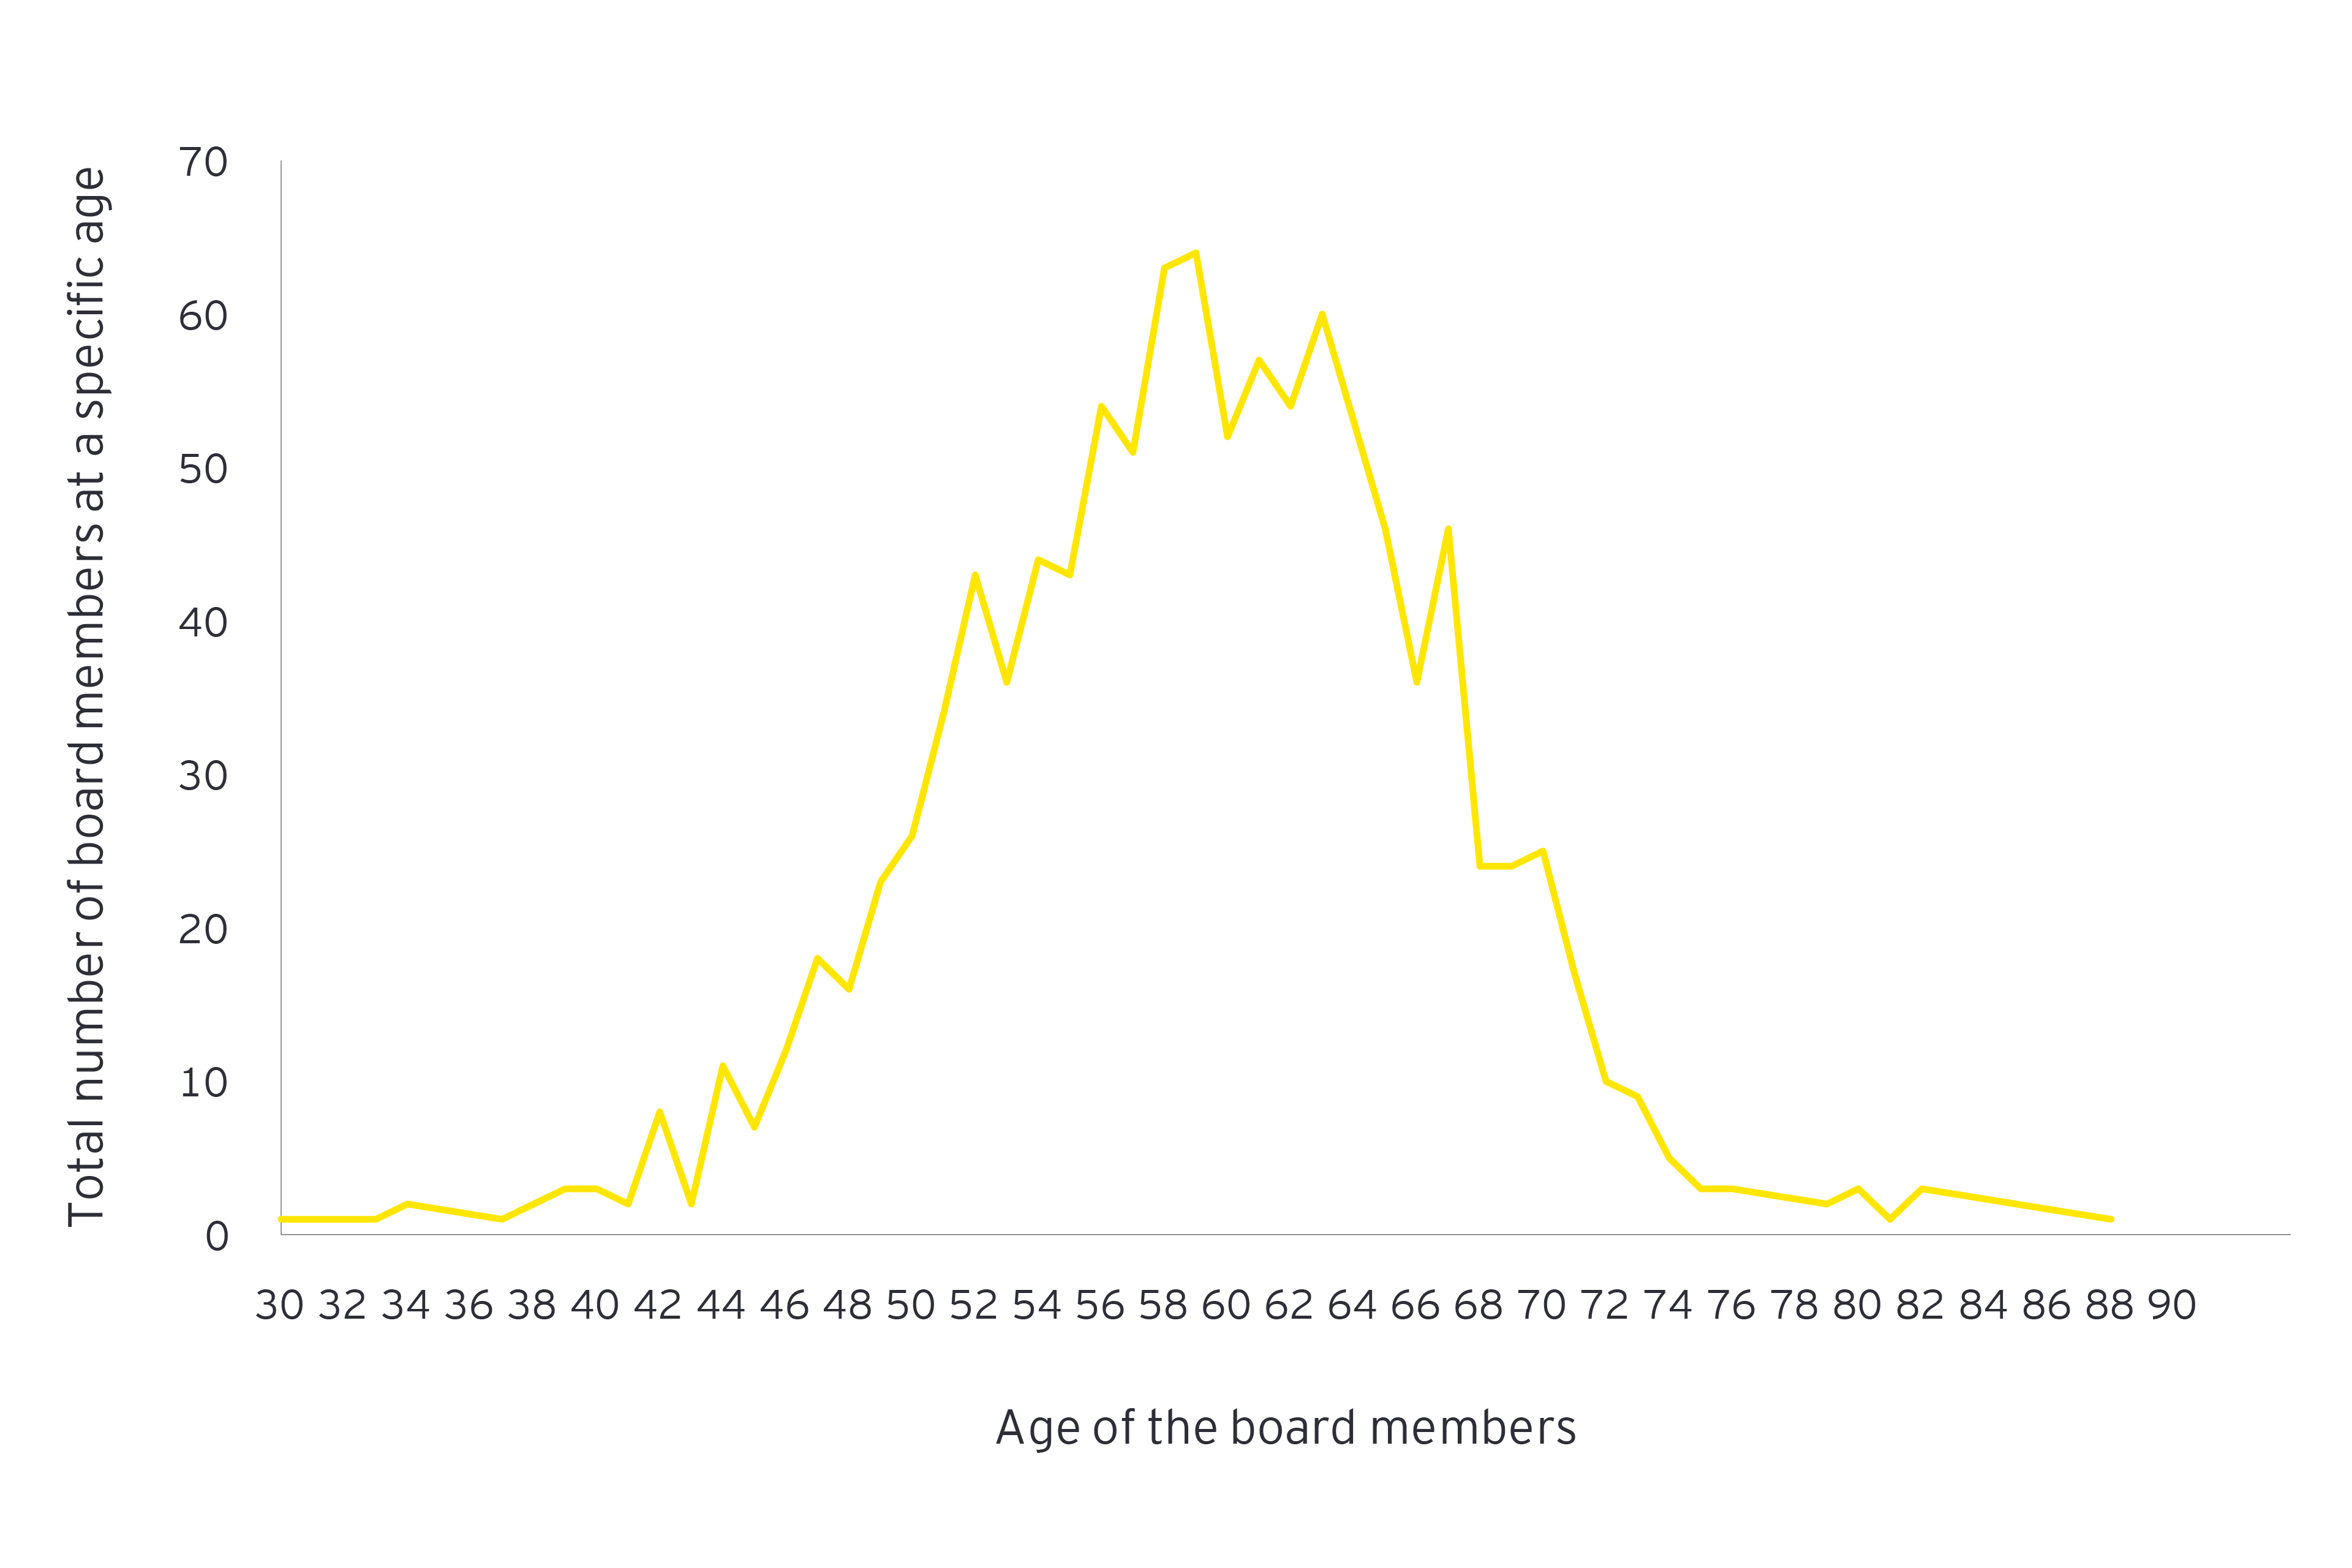 ey-seats-on-board-age-board-members-line-graph-final.png